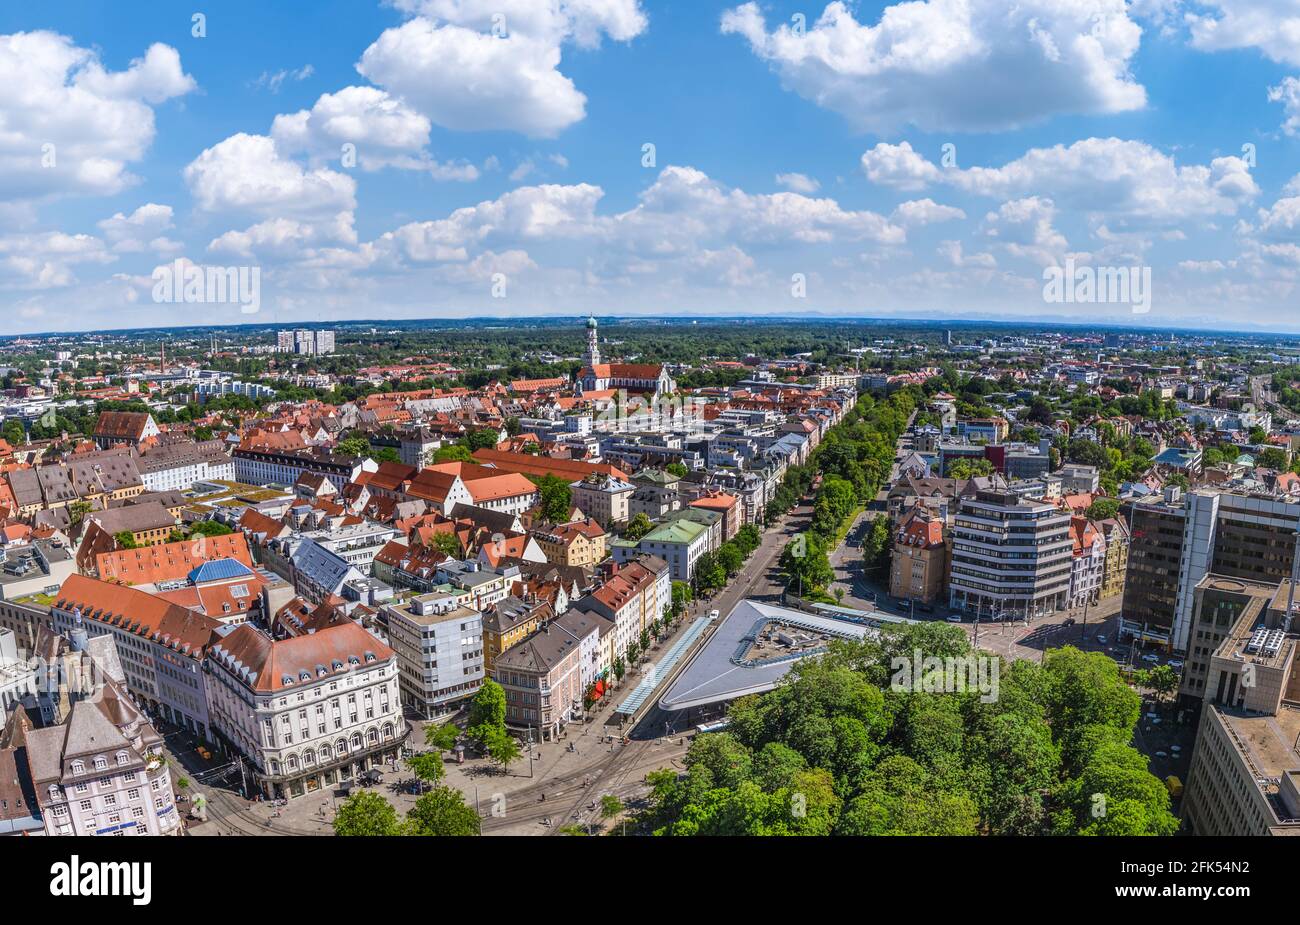 View to inner city of Augsburg Stock Photo